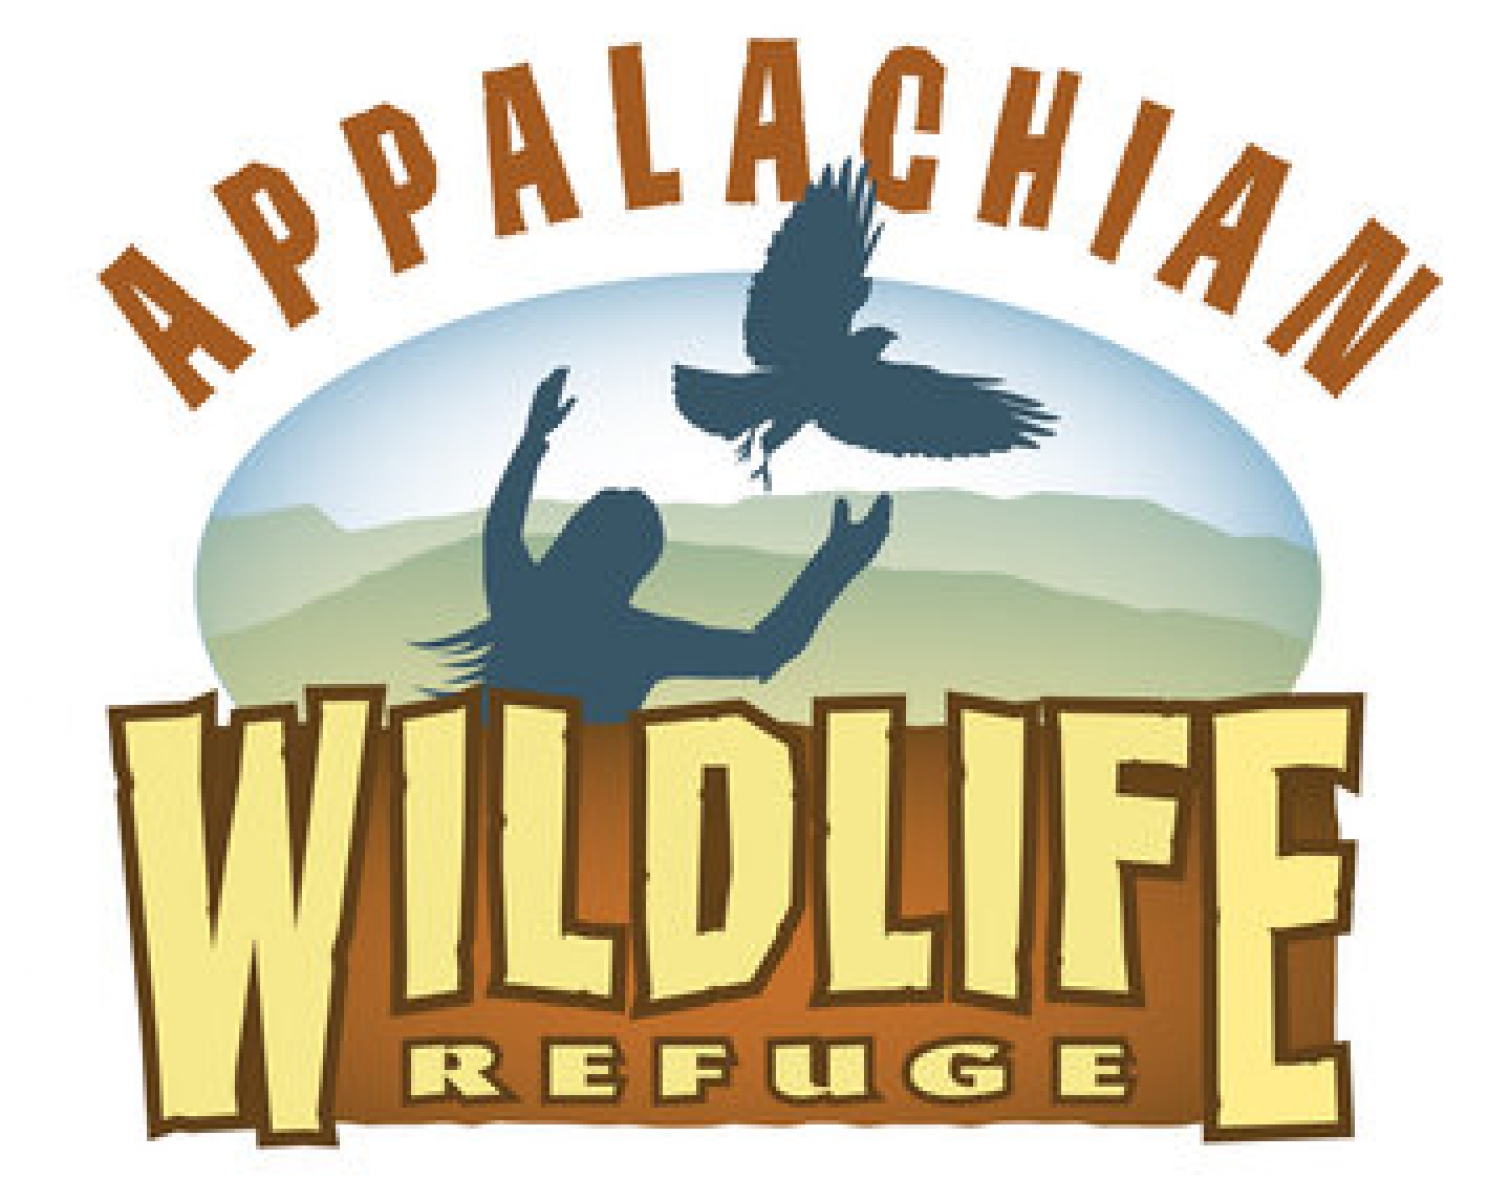 Appalachian Wildlife Refuge eCards